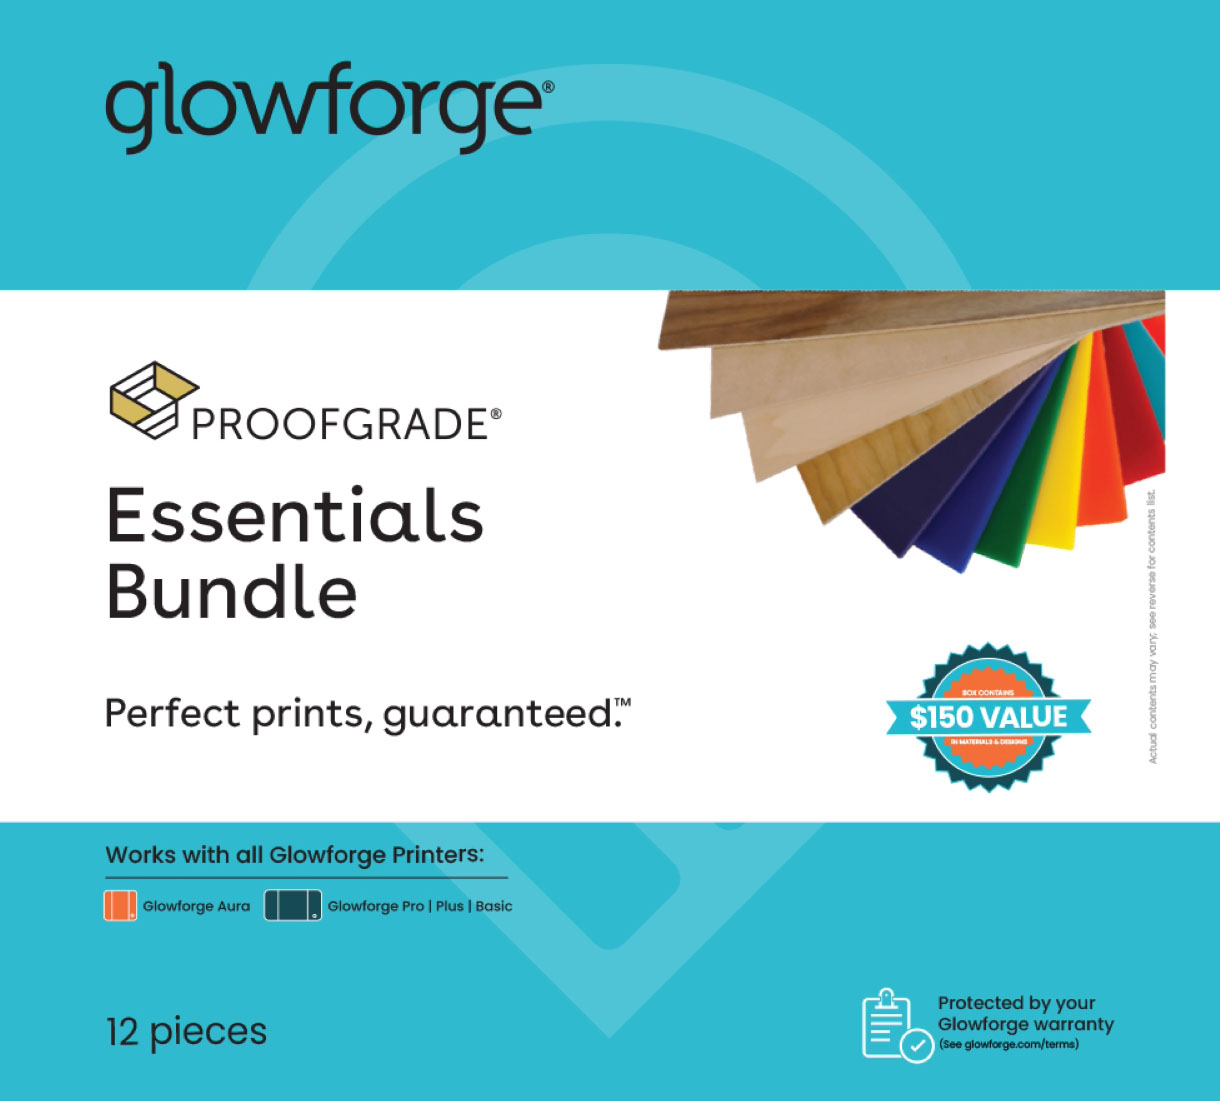 Glowforge Proofgrade Essentials Bundle 803-00 - Best Buy